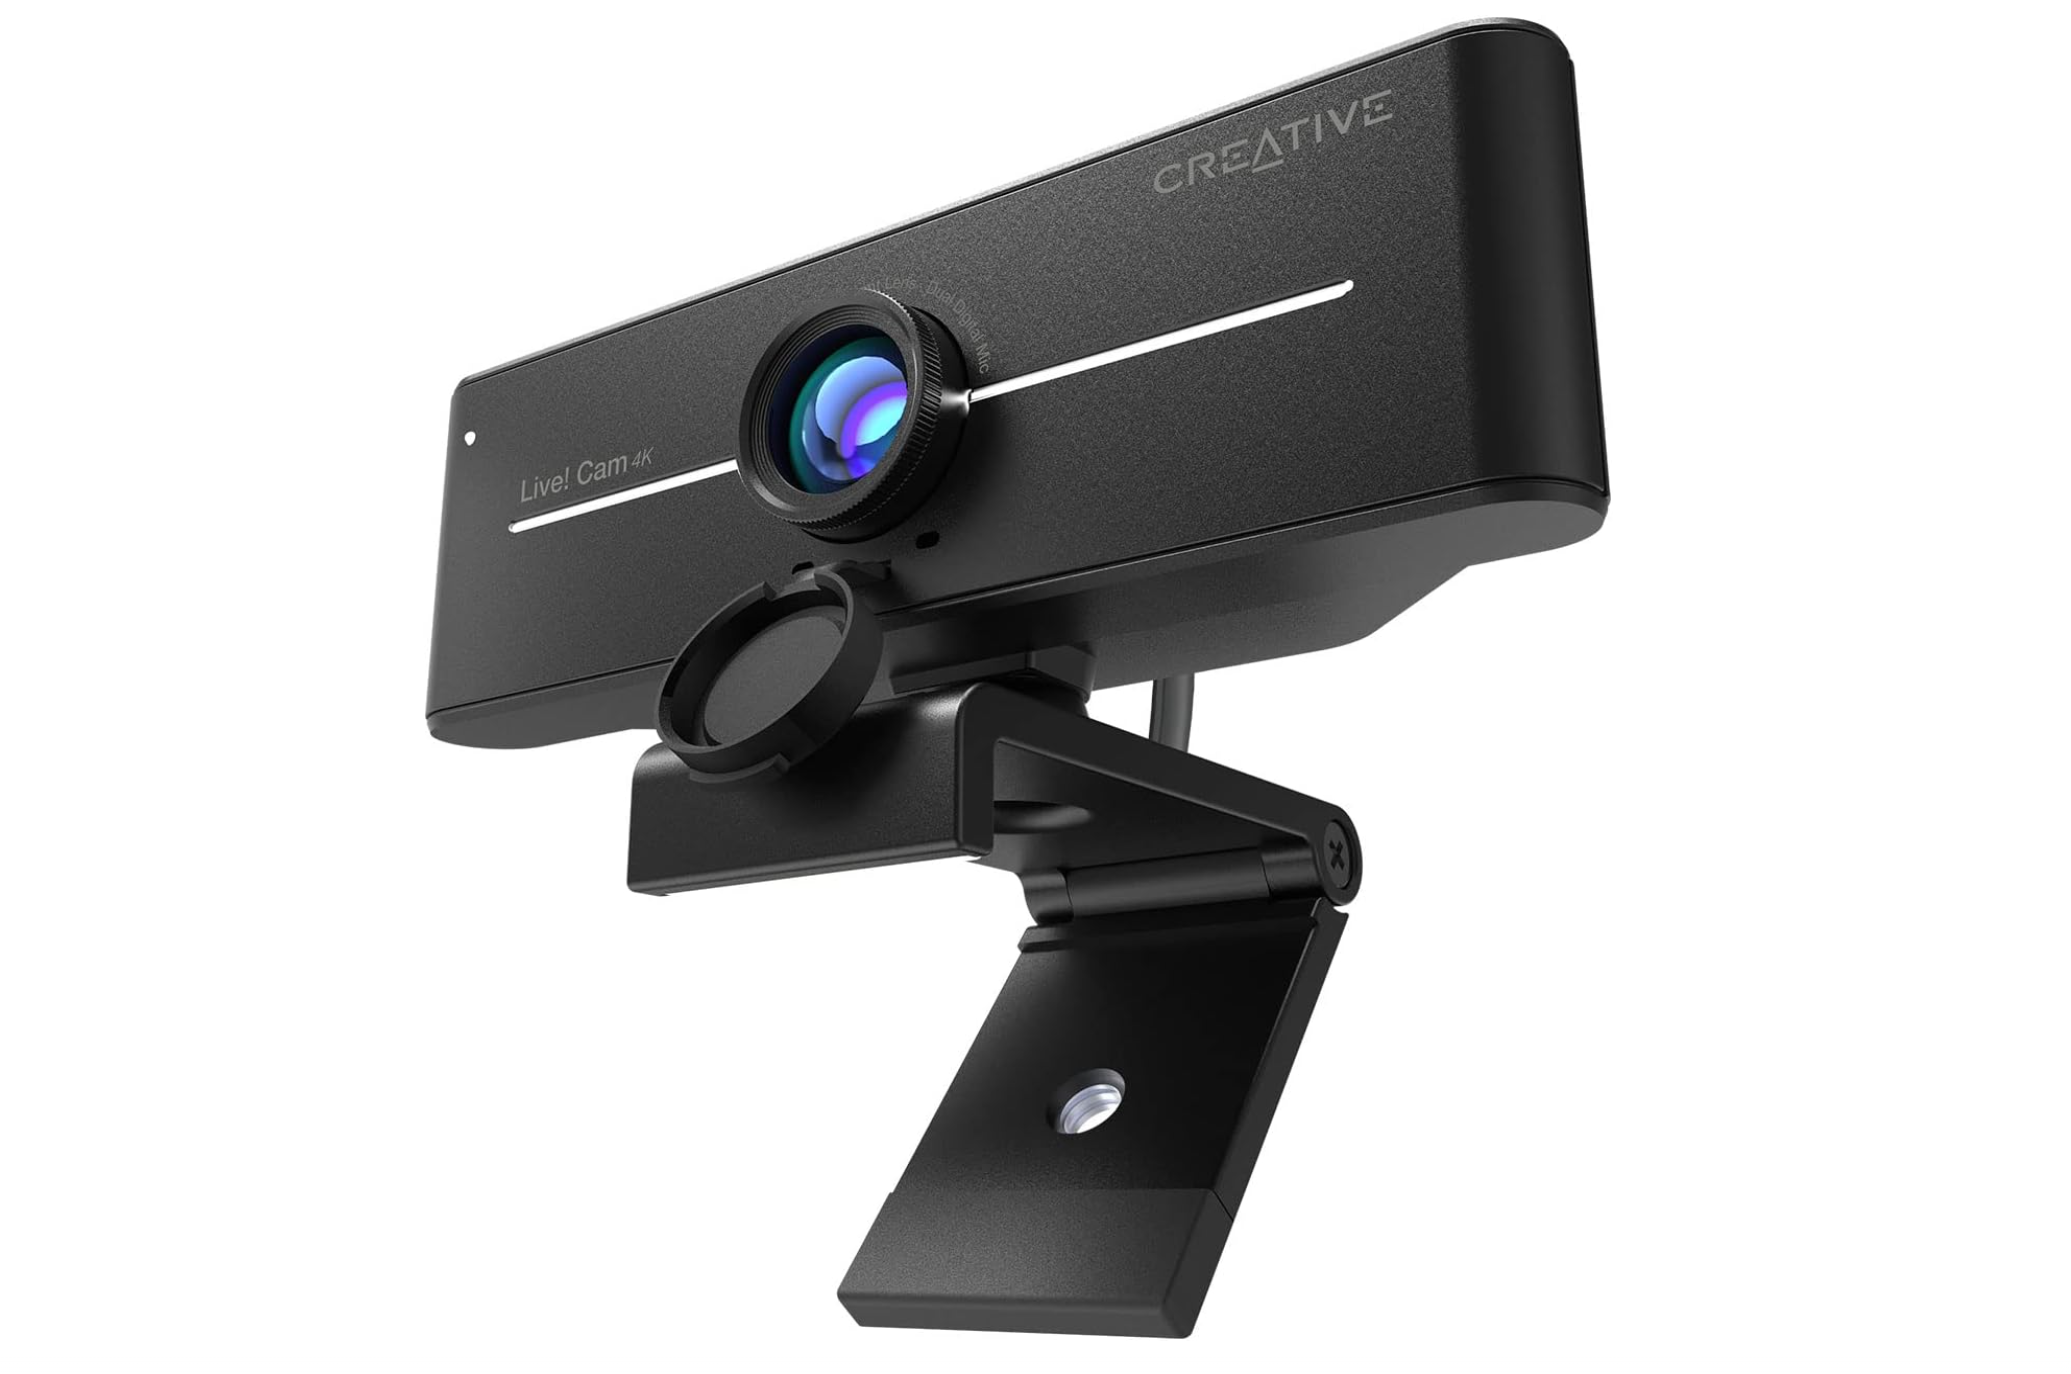 Creative Live! Cam Sync 4k - Best budget webcam